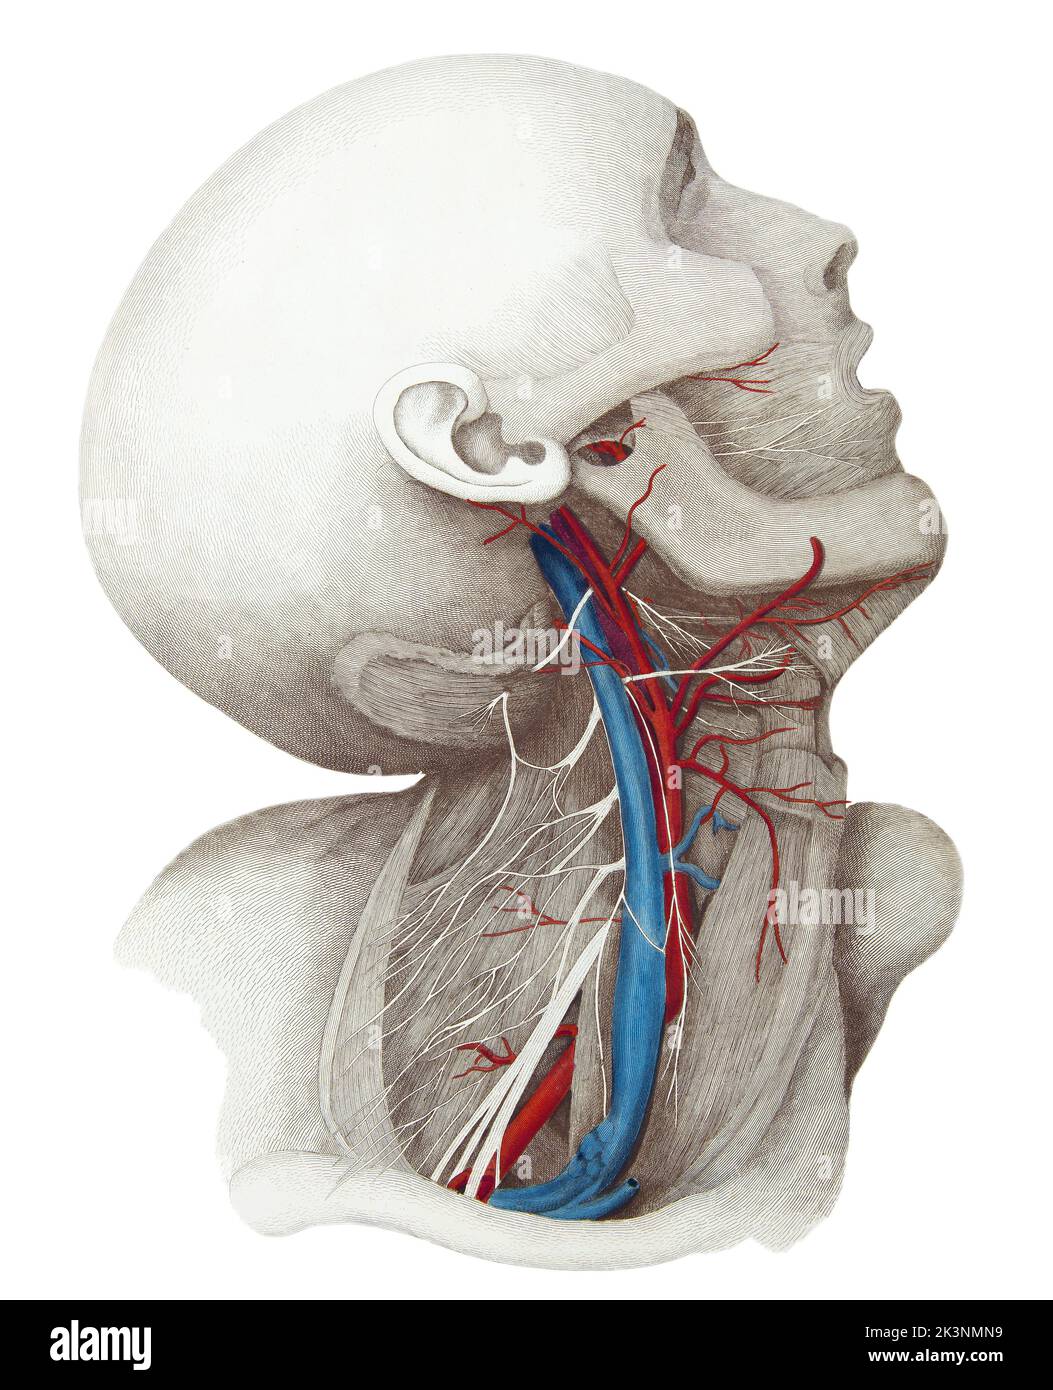 Neck anatomy, illustration Stock Photo - Alamy